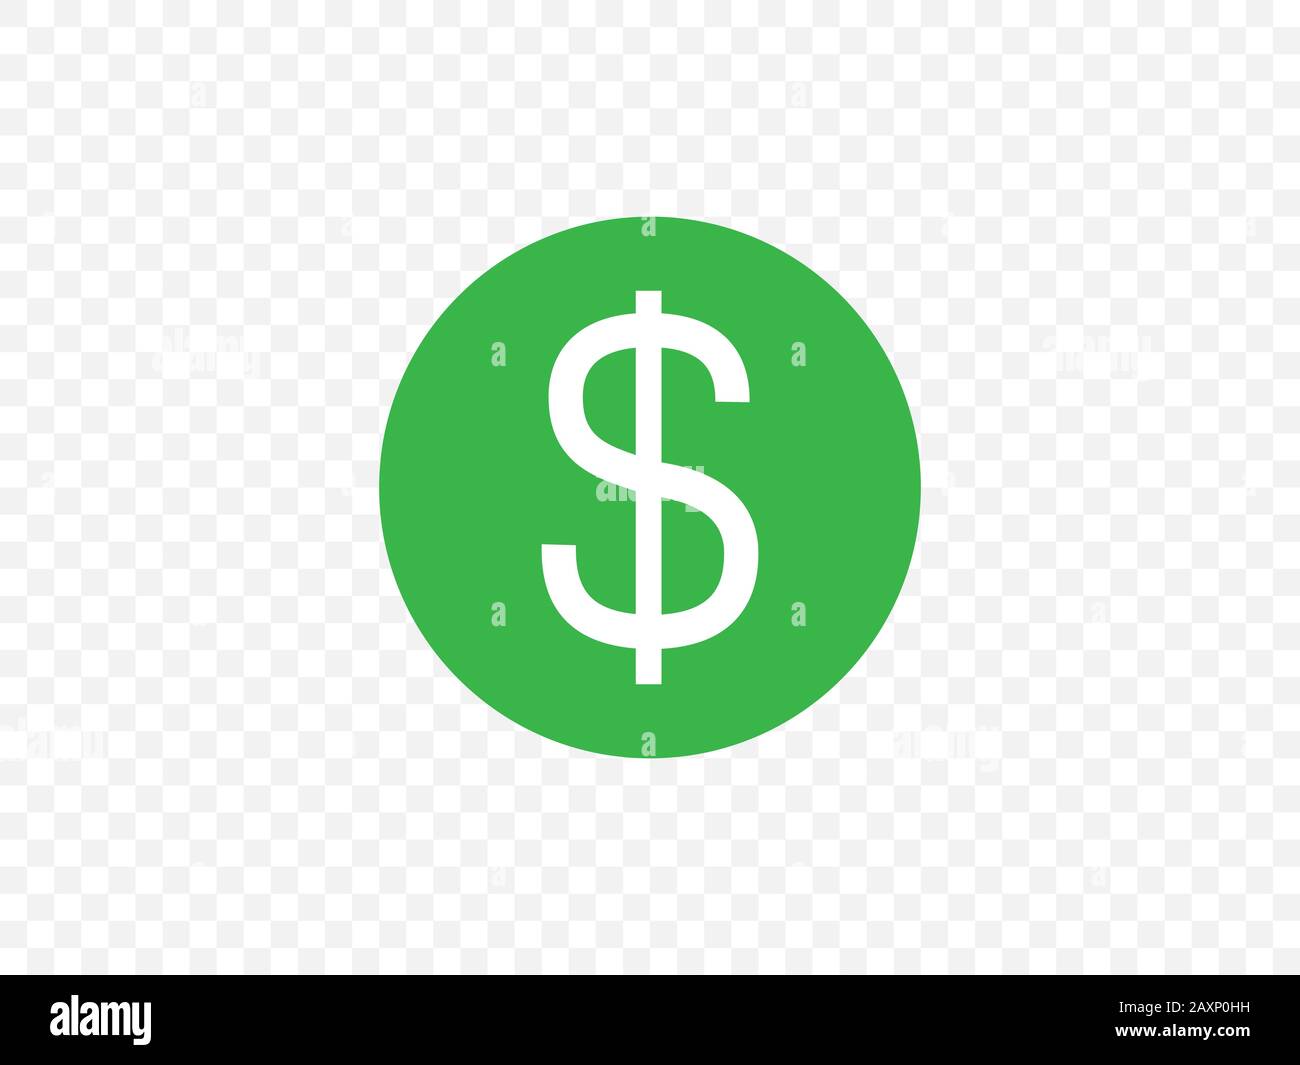 Dollar, Geldsymbol. Vektorgrafiken, flaches Design Stock Vektor